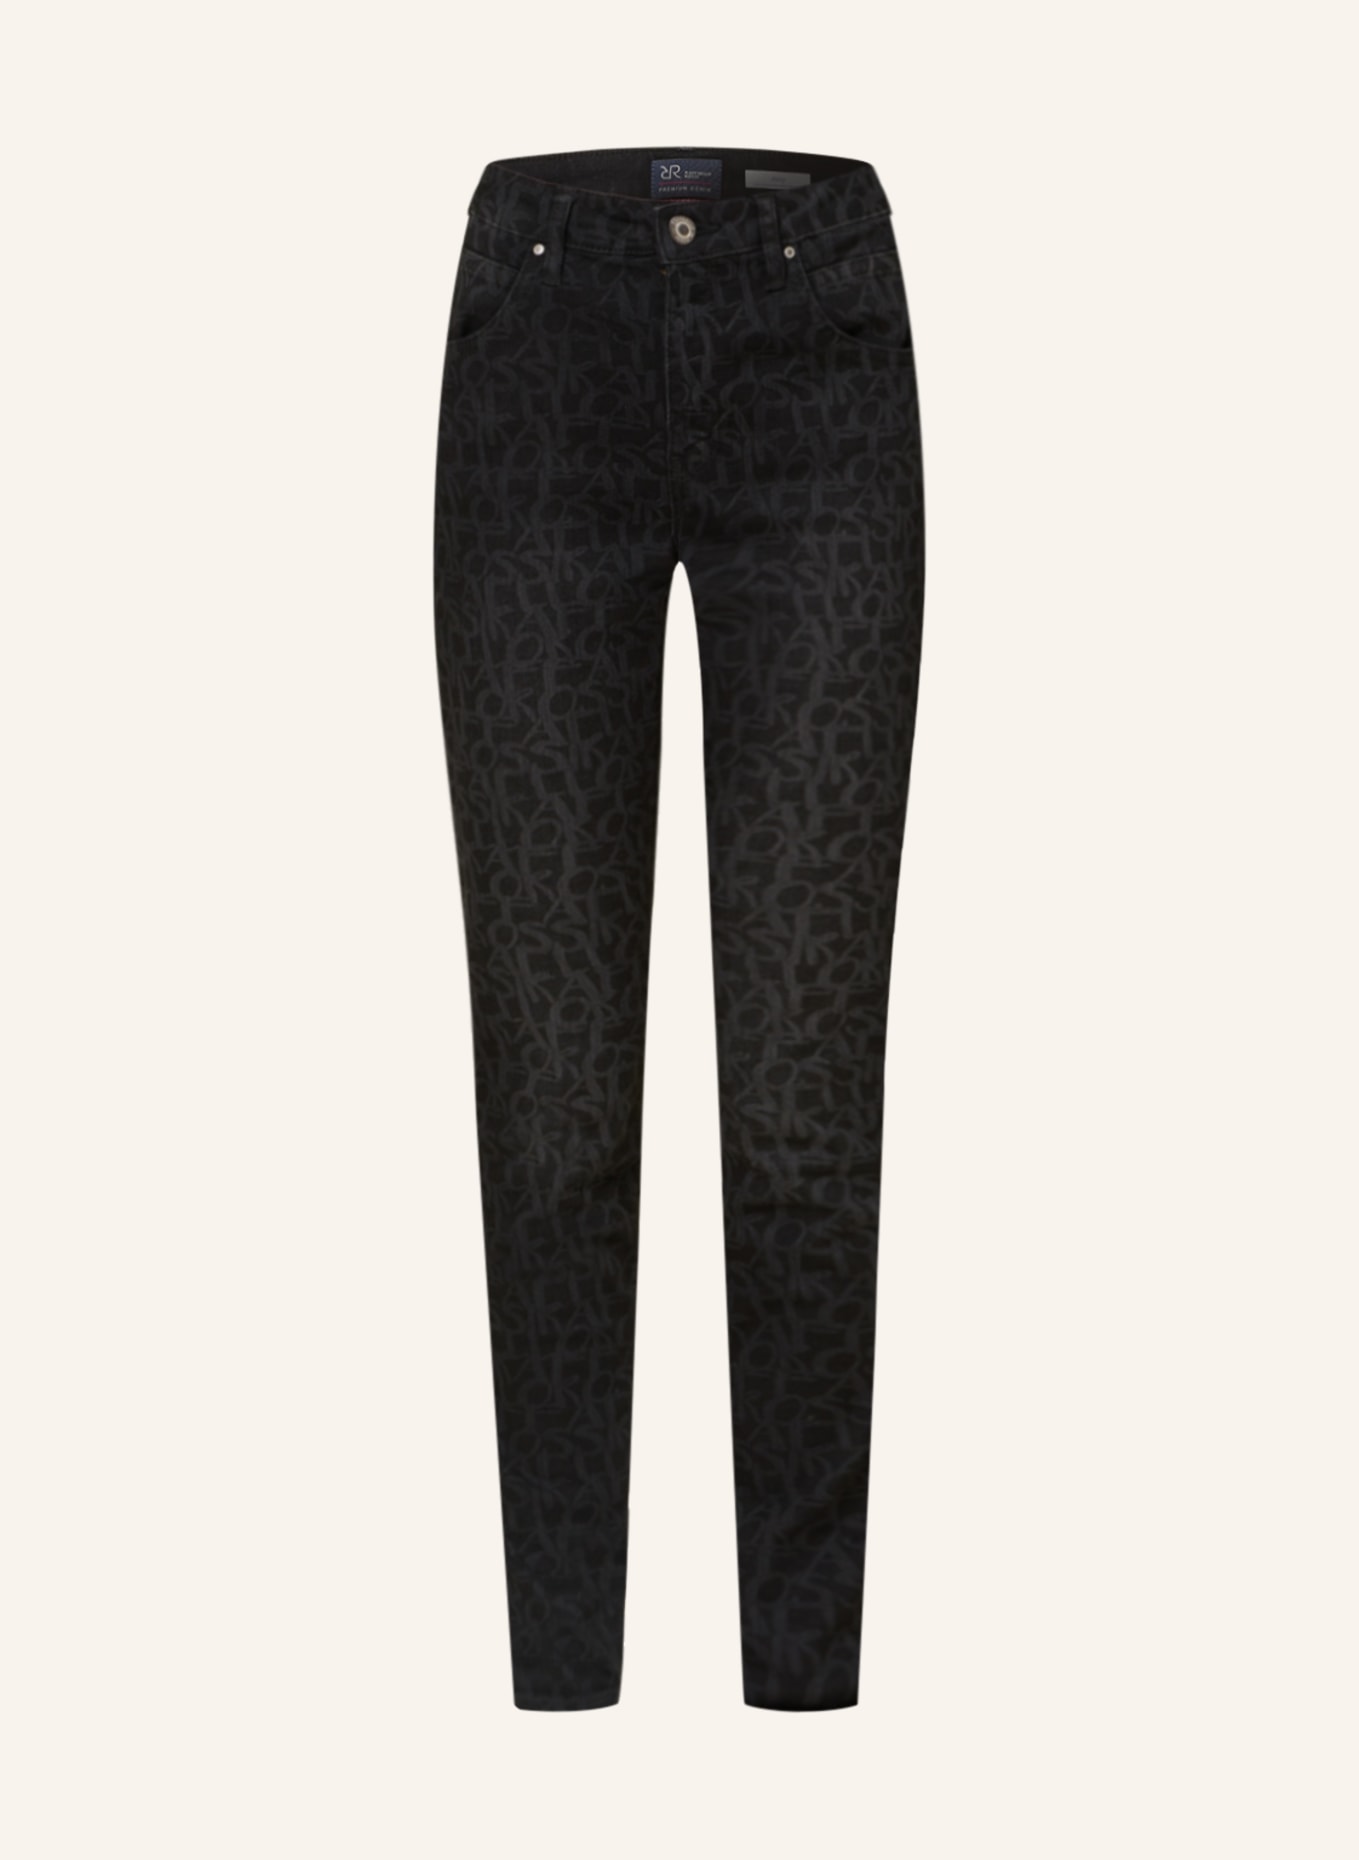 RAFFAELLO ROSSI Jeans AMAL, Farbe: 99 Schwarz gemustert (Bild 1)